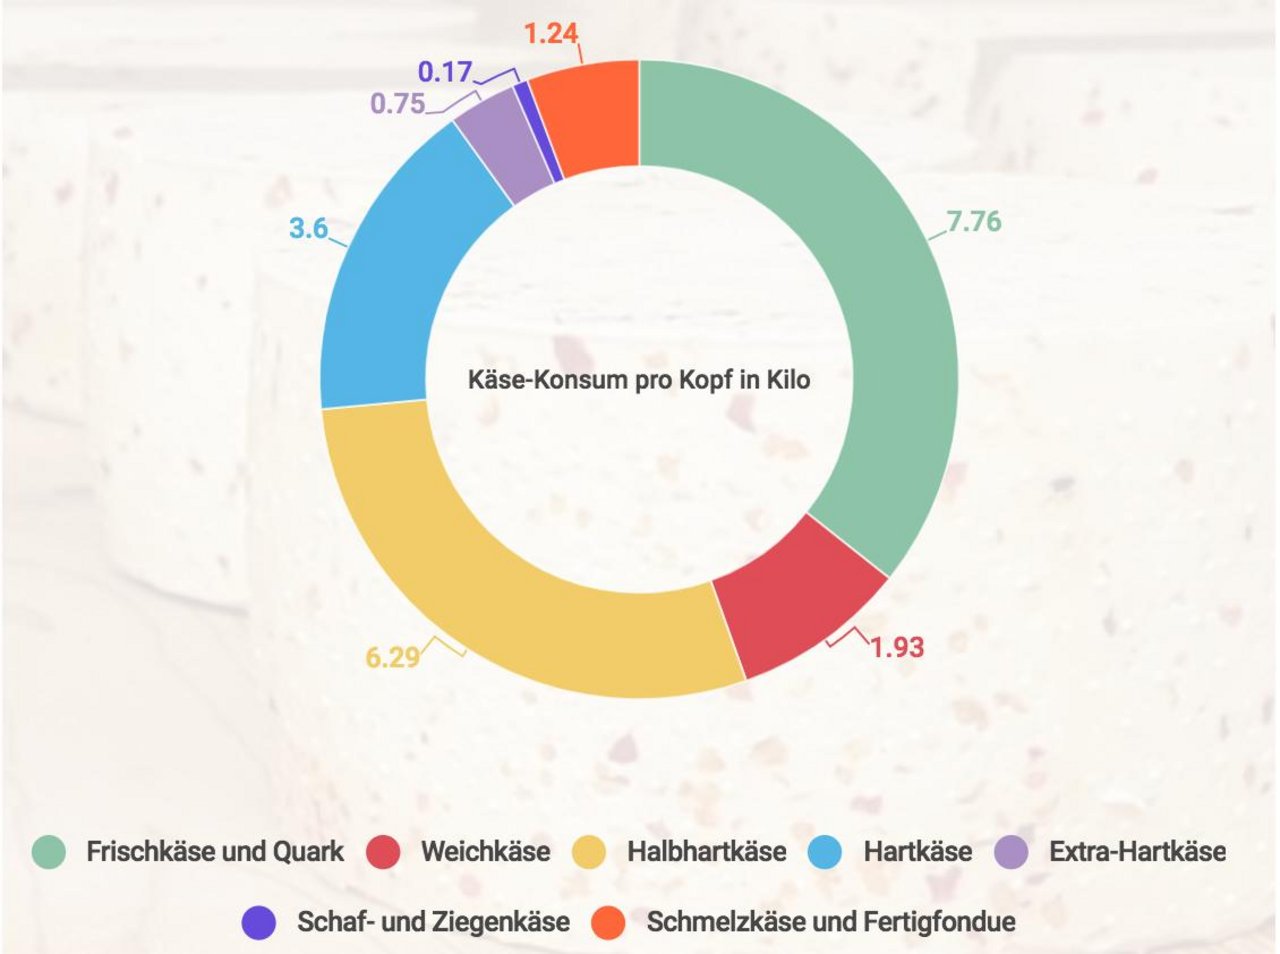 Pro Kopf Konsum in Kilo. (Grafik lid)